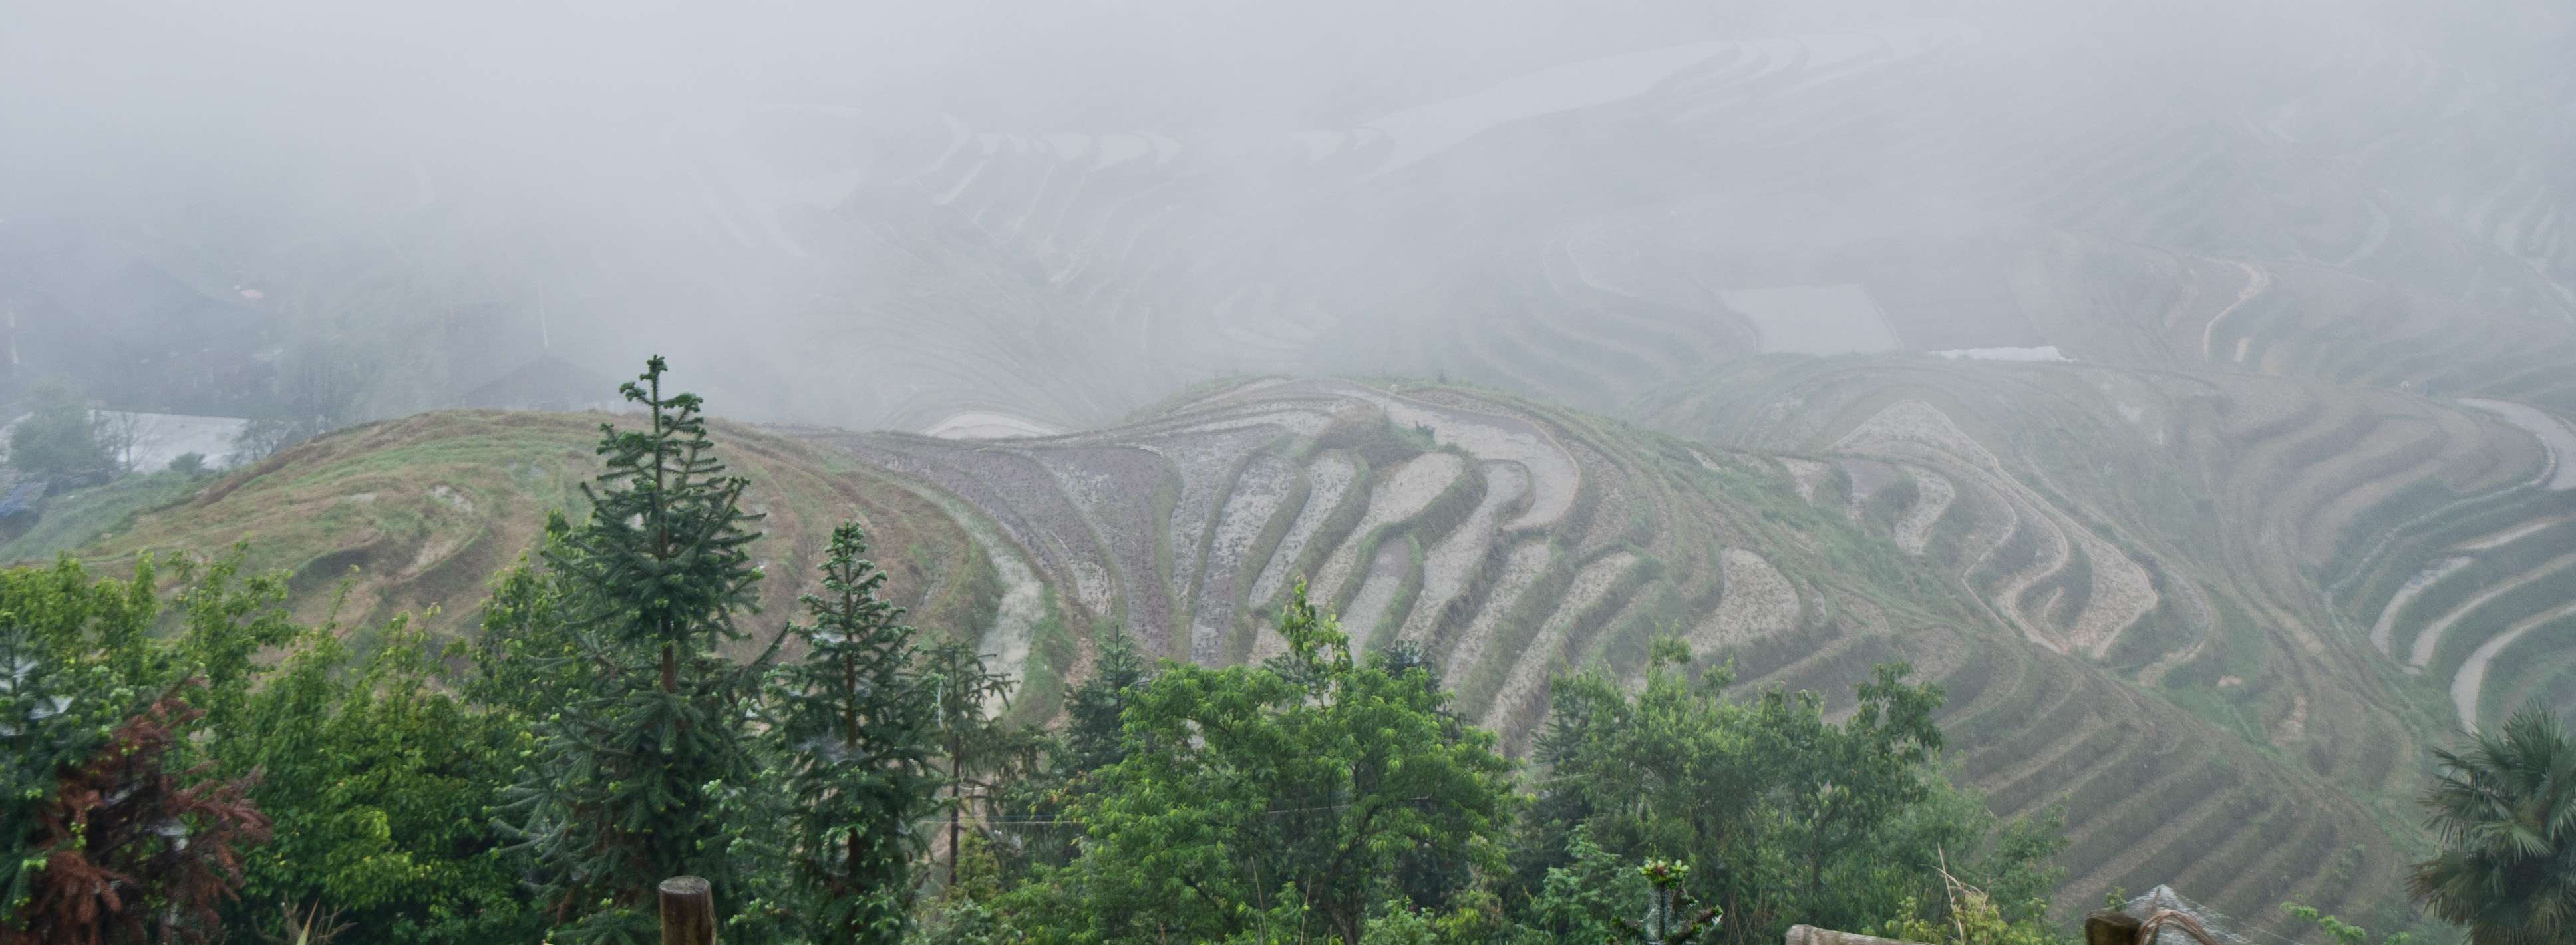 La Terrazas de Arroz de Longji en palanquín. - China milenaria (10)